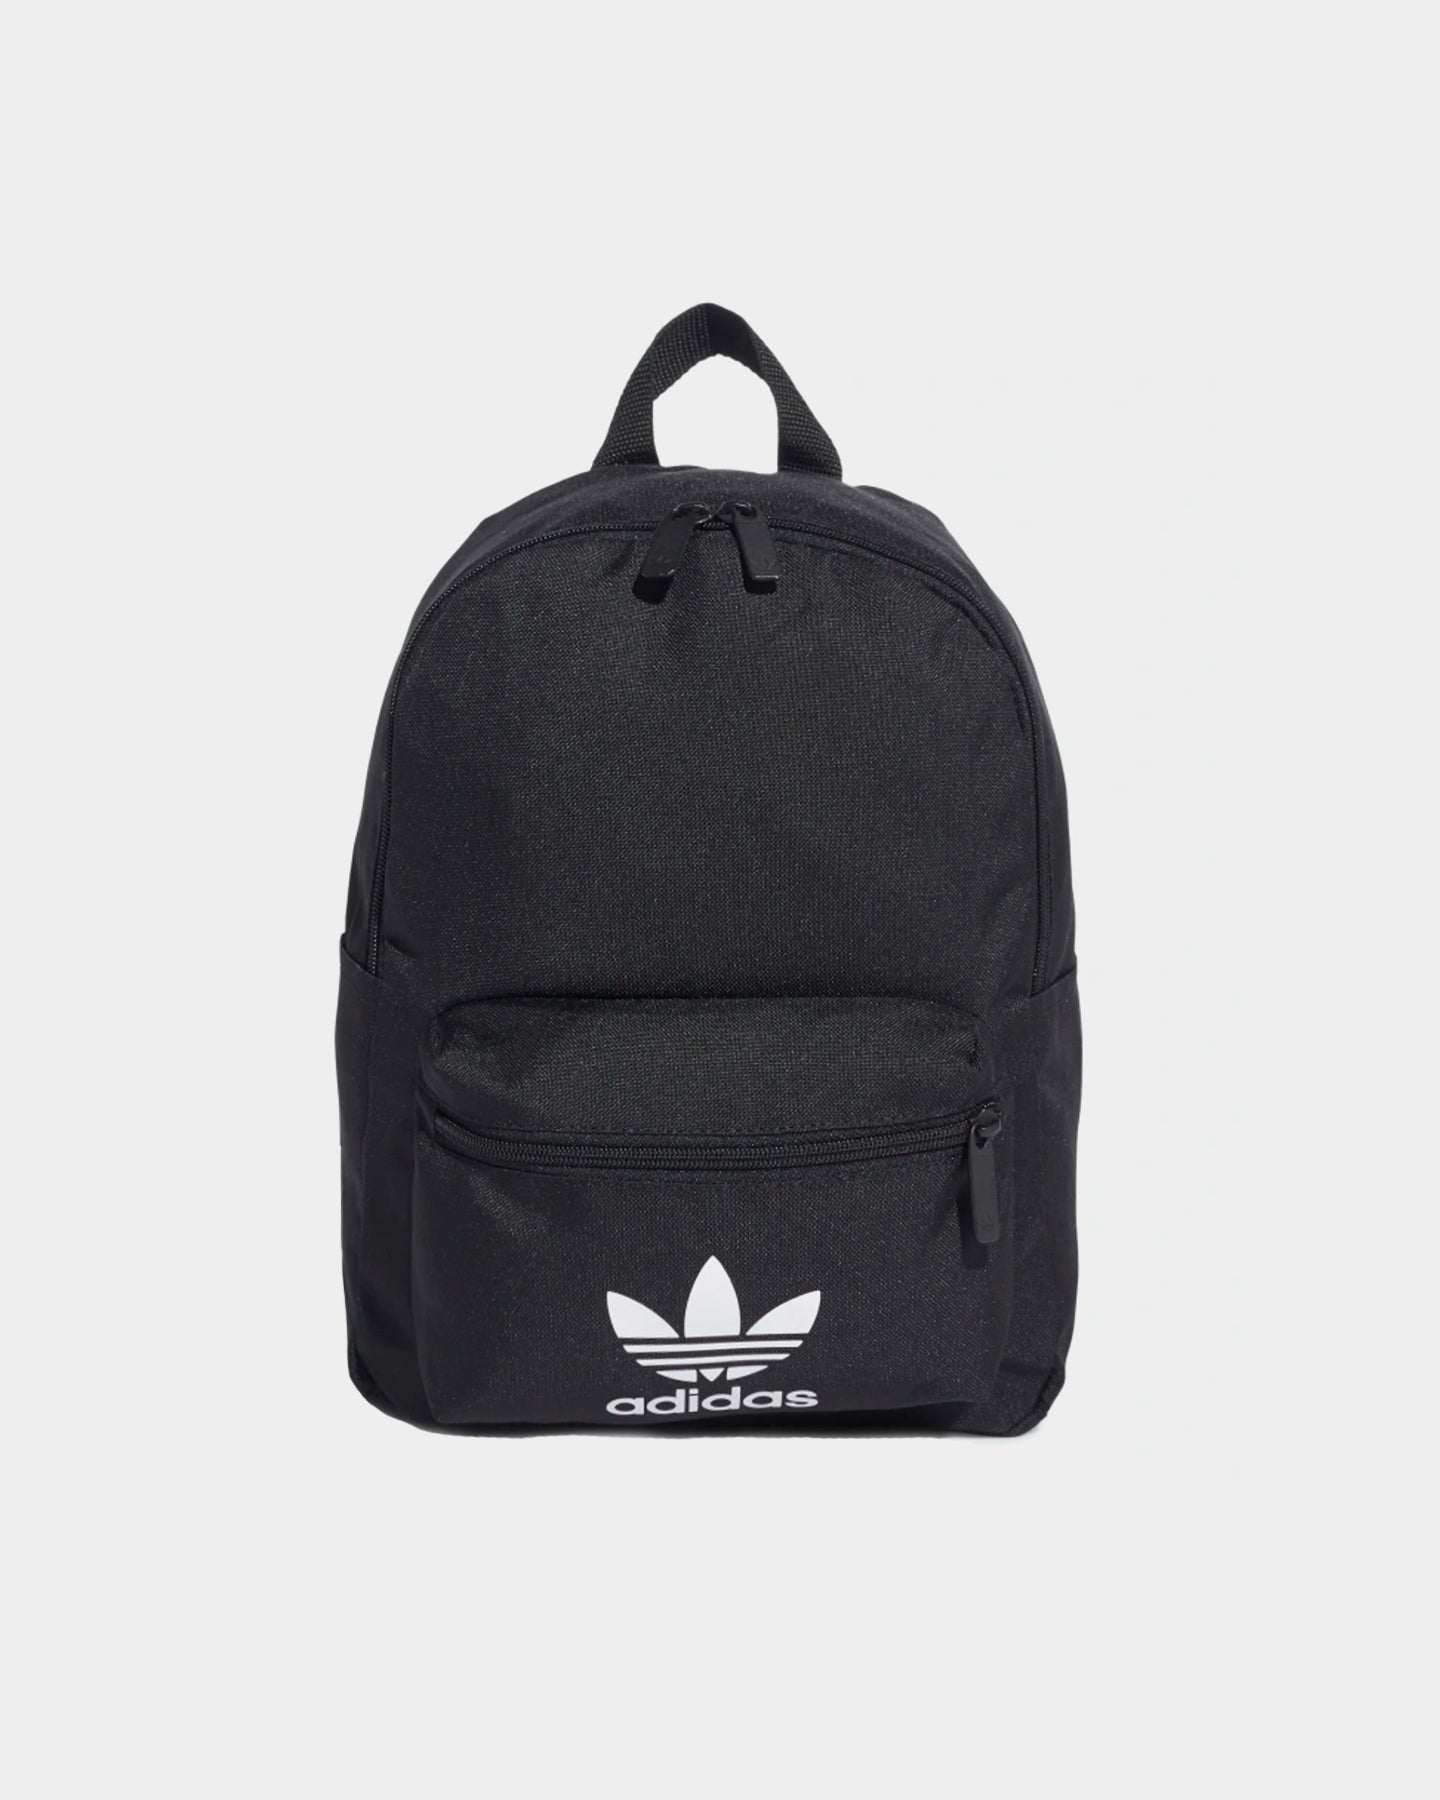 Adidas Classic Backpack Black | Culture 